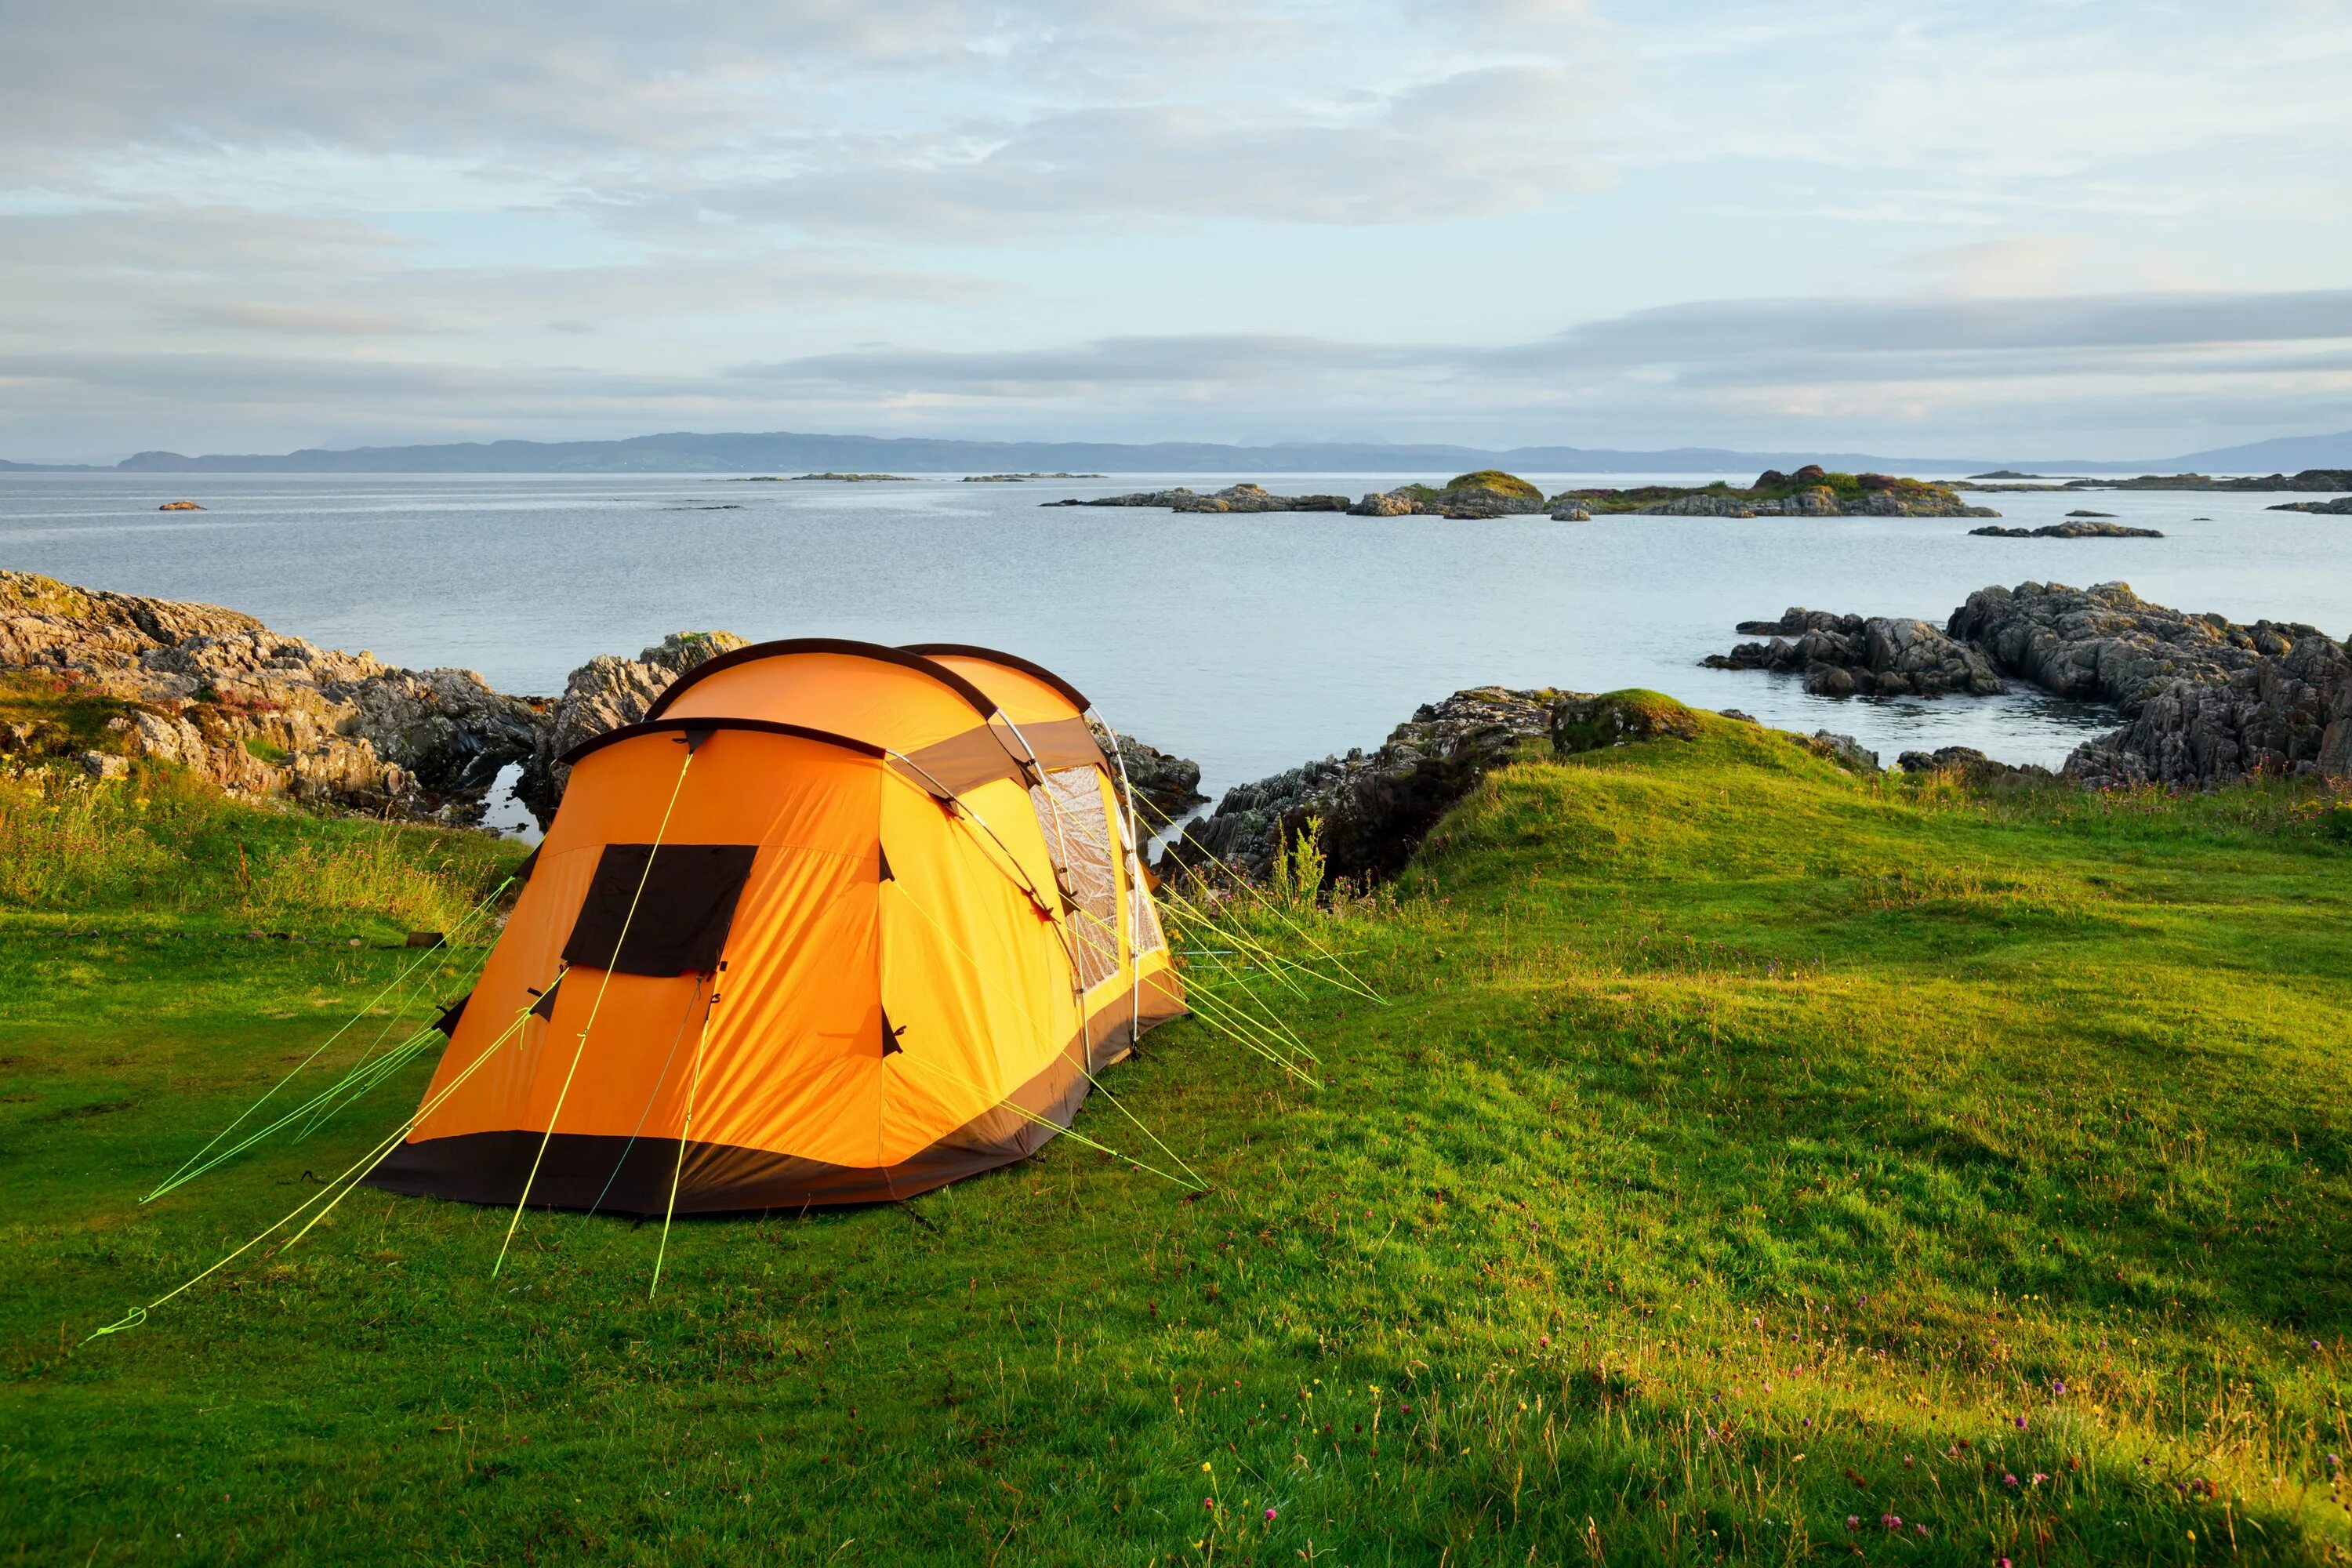 Camping photo. Палатка на природе. Кемпинг. Палатки для кемпинга. Кемпинг на природе.